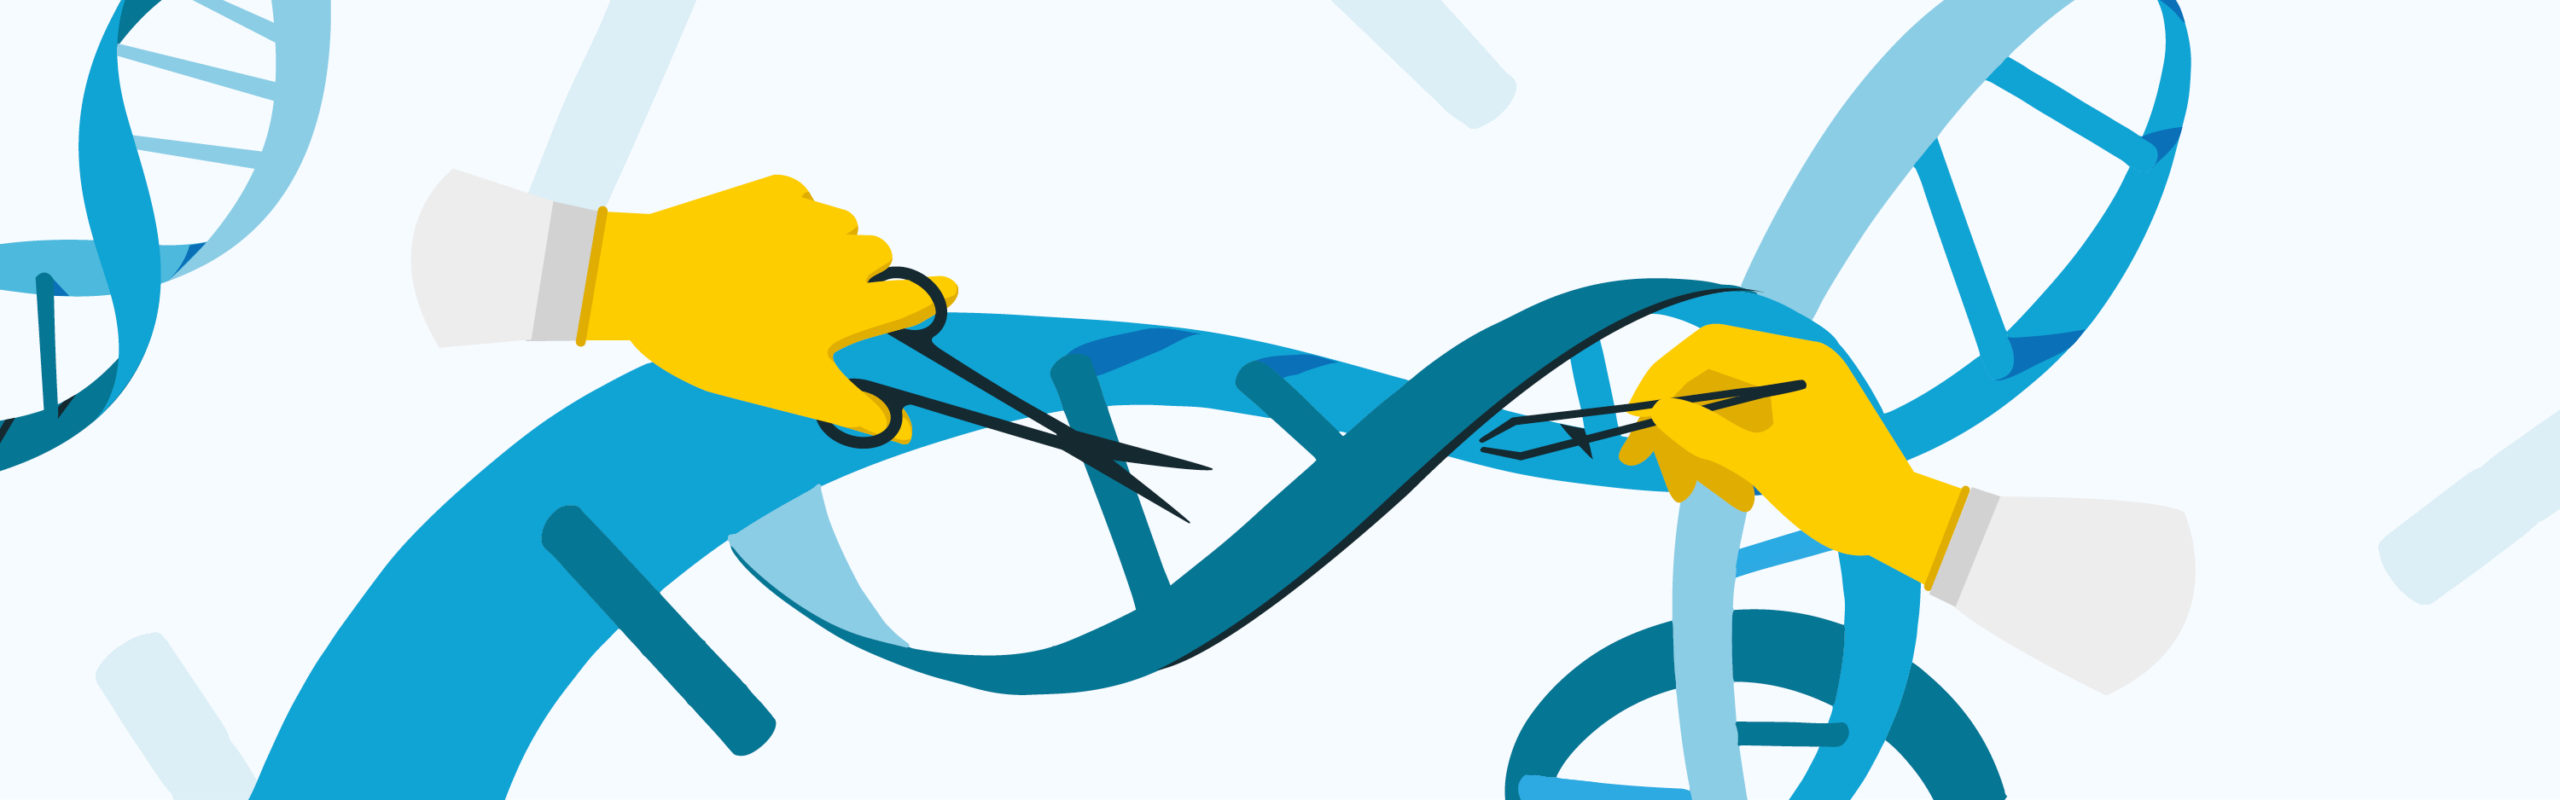 Image Description: Article banner. A cartoony image of hands cutting up a DNA spiral . End Description